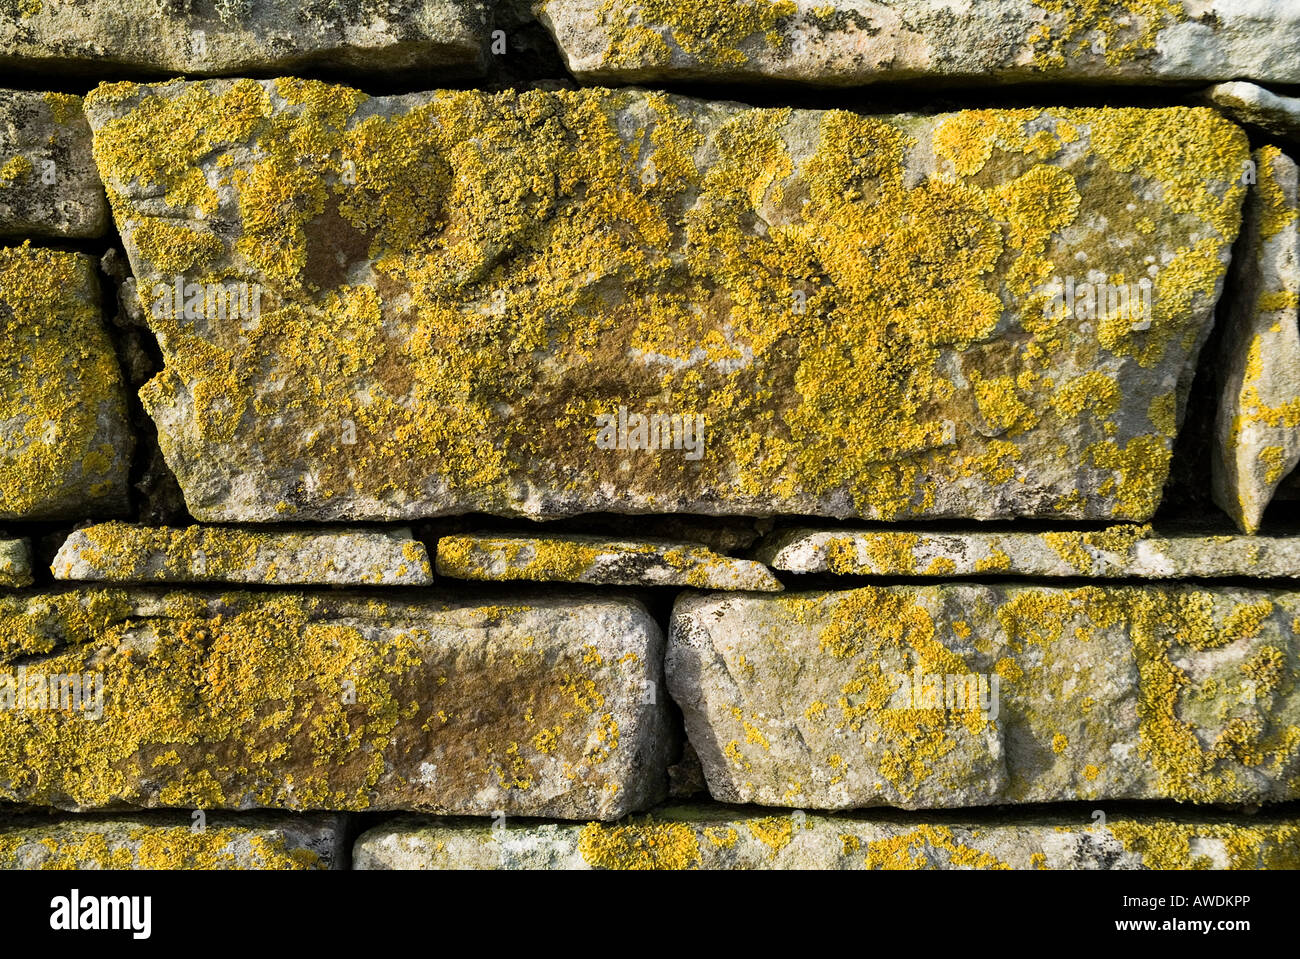 dh Lichen LICHEN UK Lichens dry stonewall stone wall xanthoria parietina alga yellow fungi close up background texture rock Stock Photo